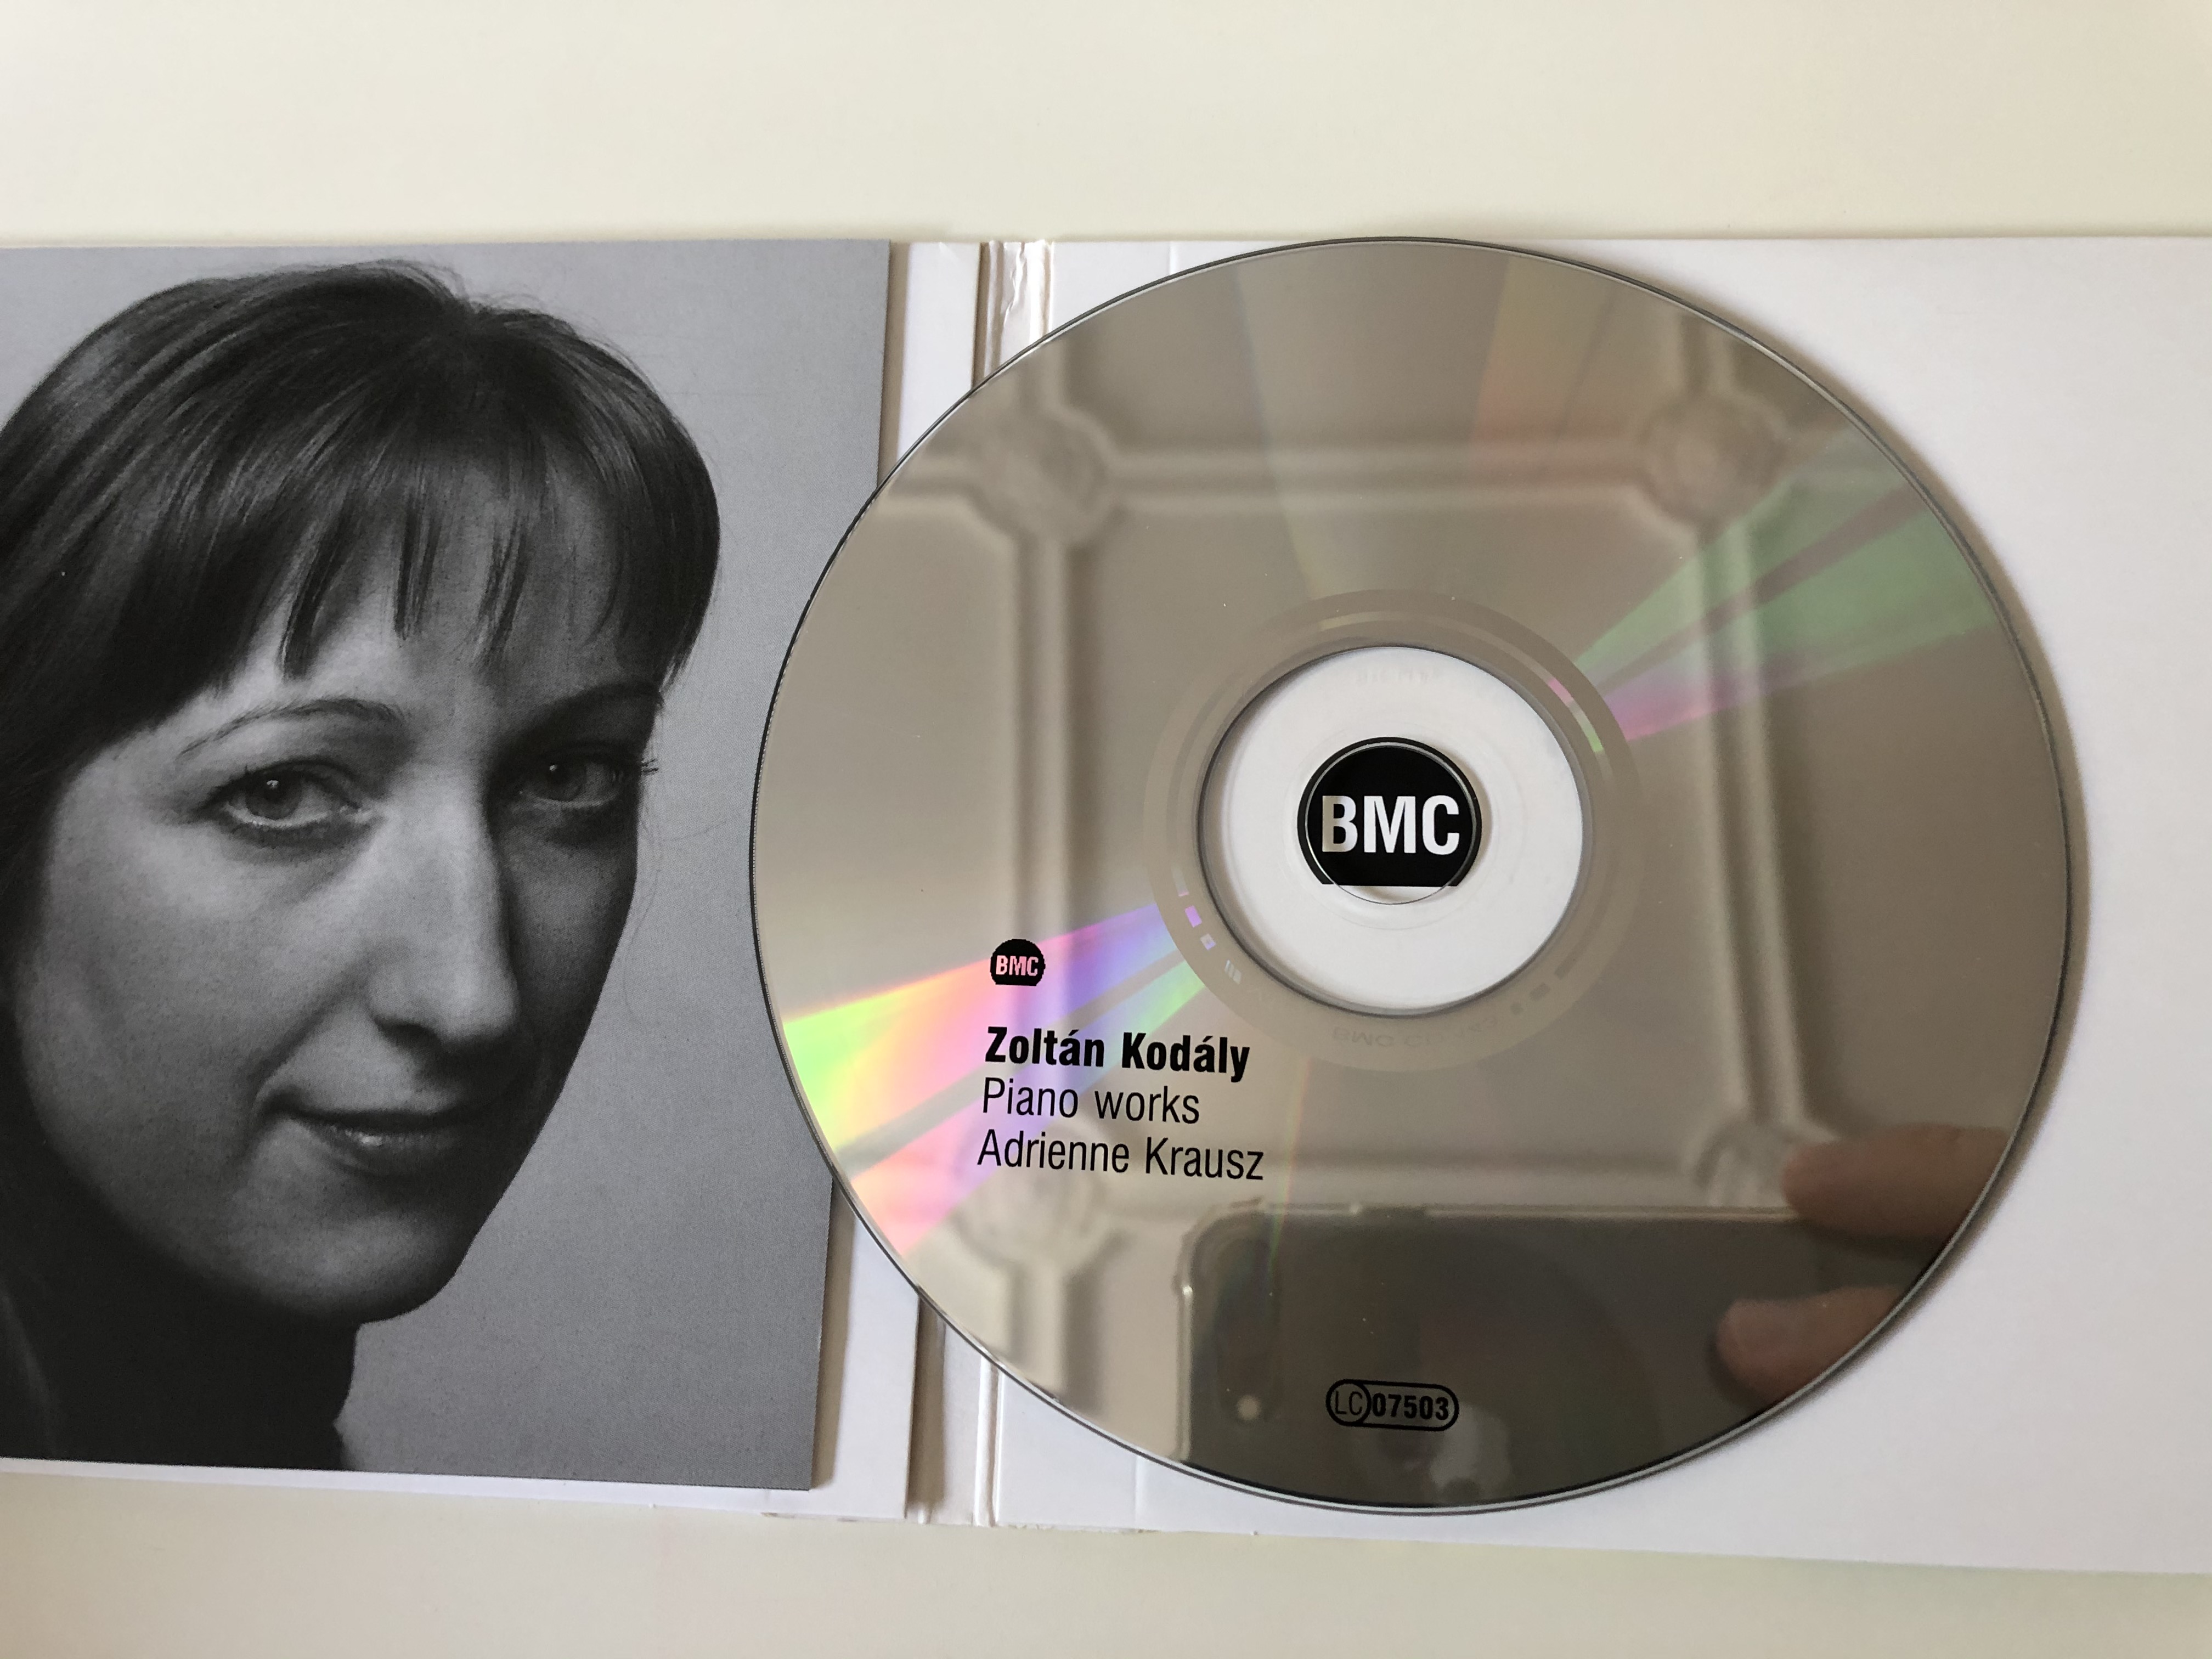 zolt-n-kod-ly-piano-works-adrienne-krausz-budapest-music-center-records-audio-cd-2008-bmc-cd143-4-.jpg